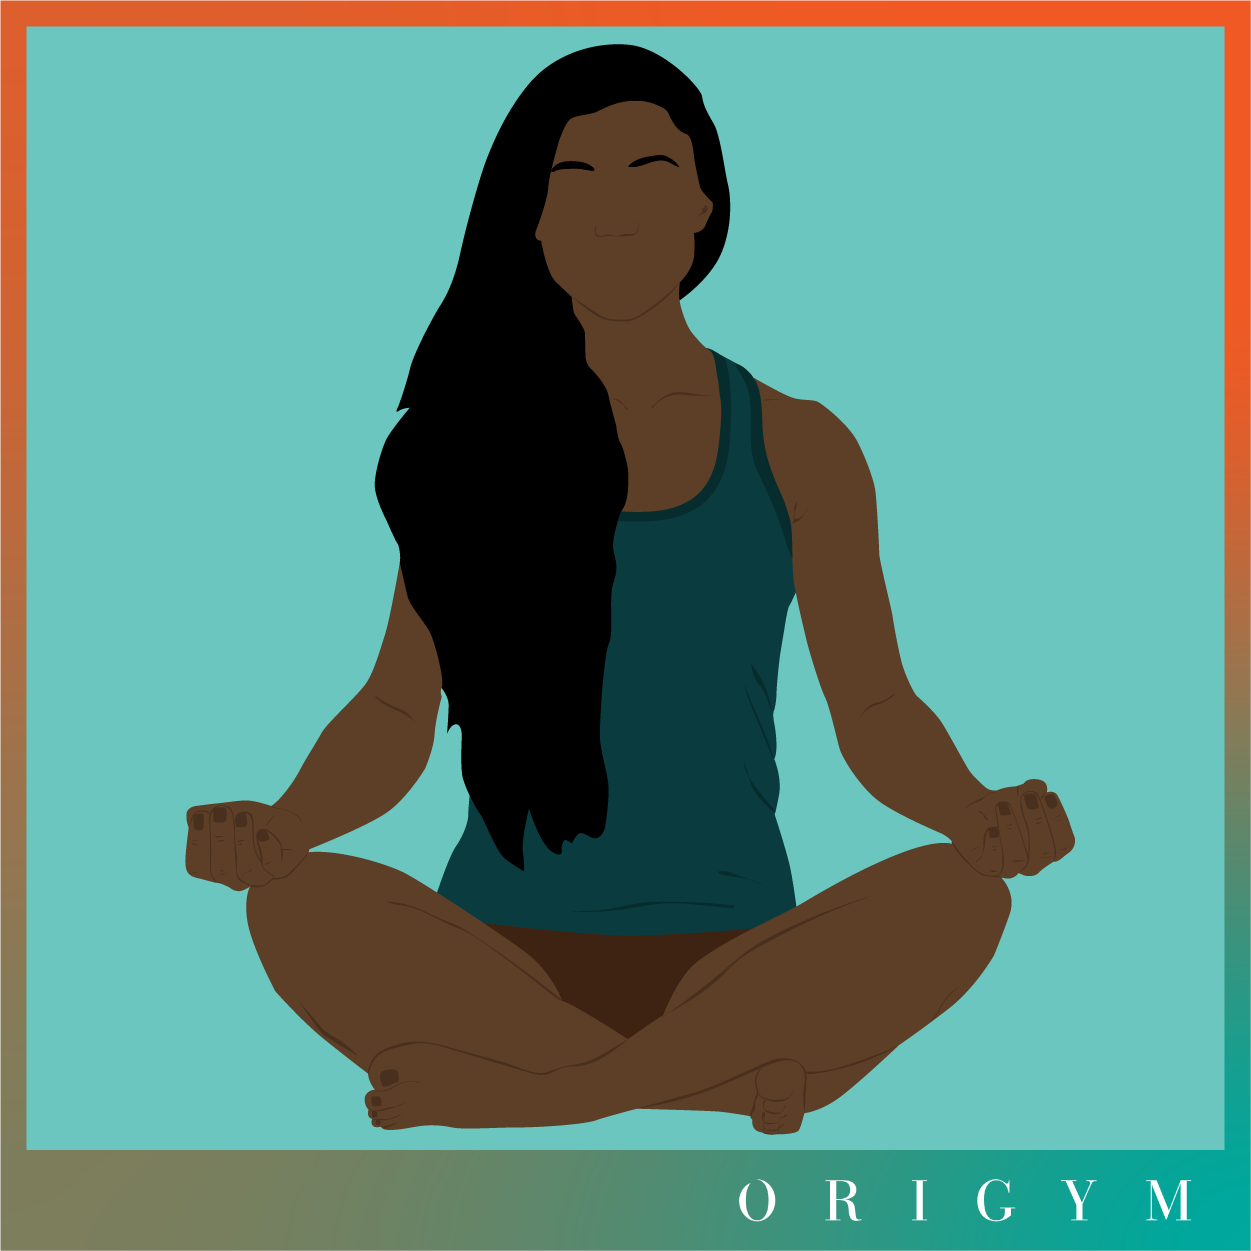 Yoga Poses For Stroke Rehabilitation
